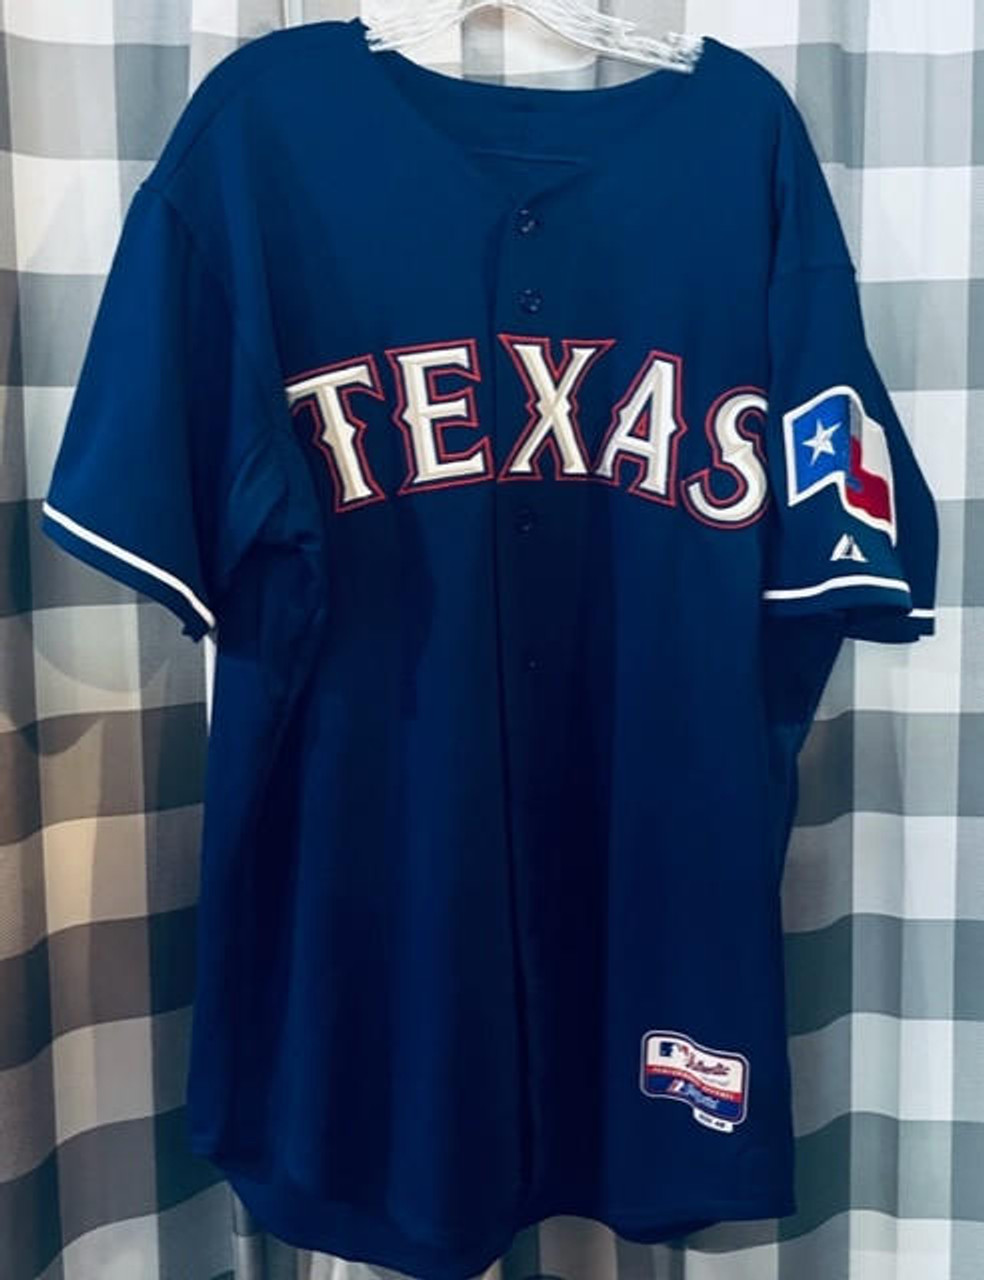 Mlb Texas Rangers Baseball Jersey